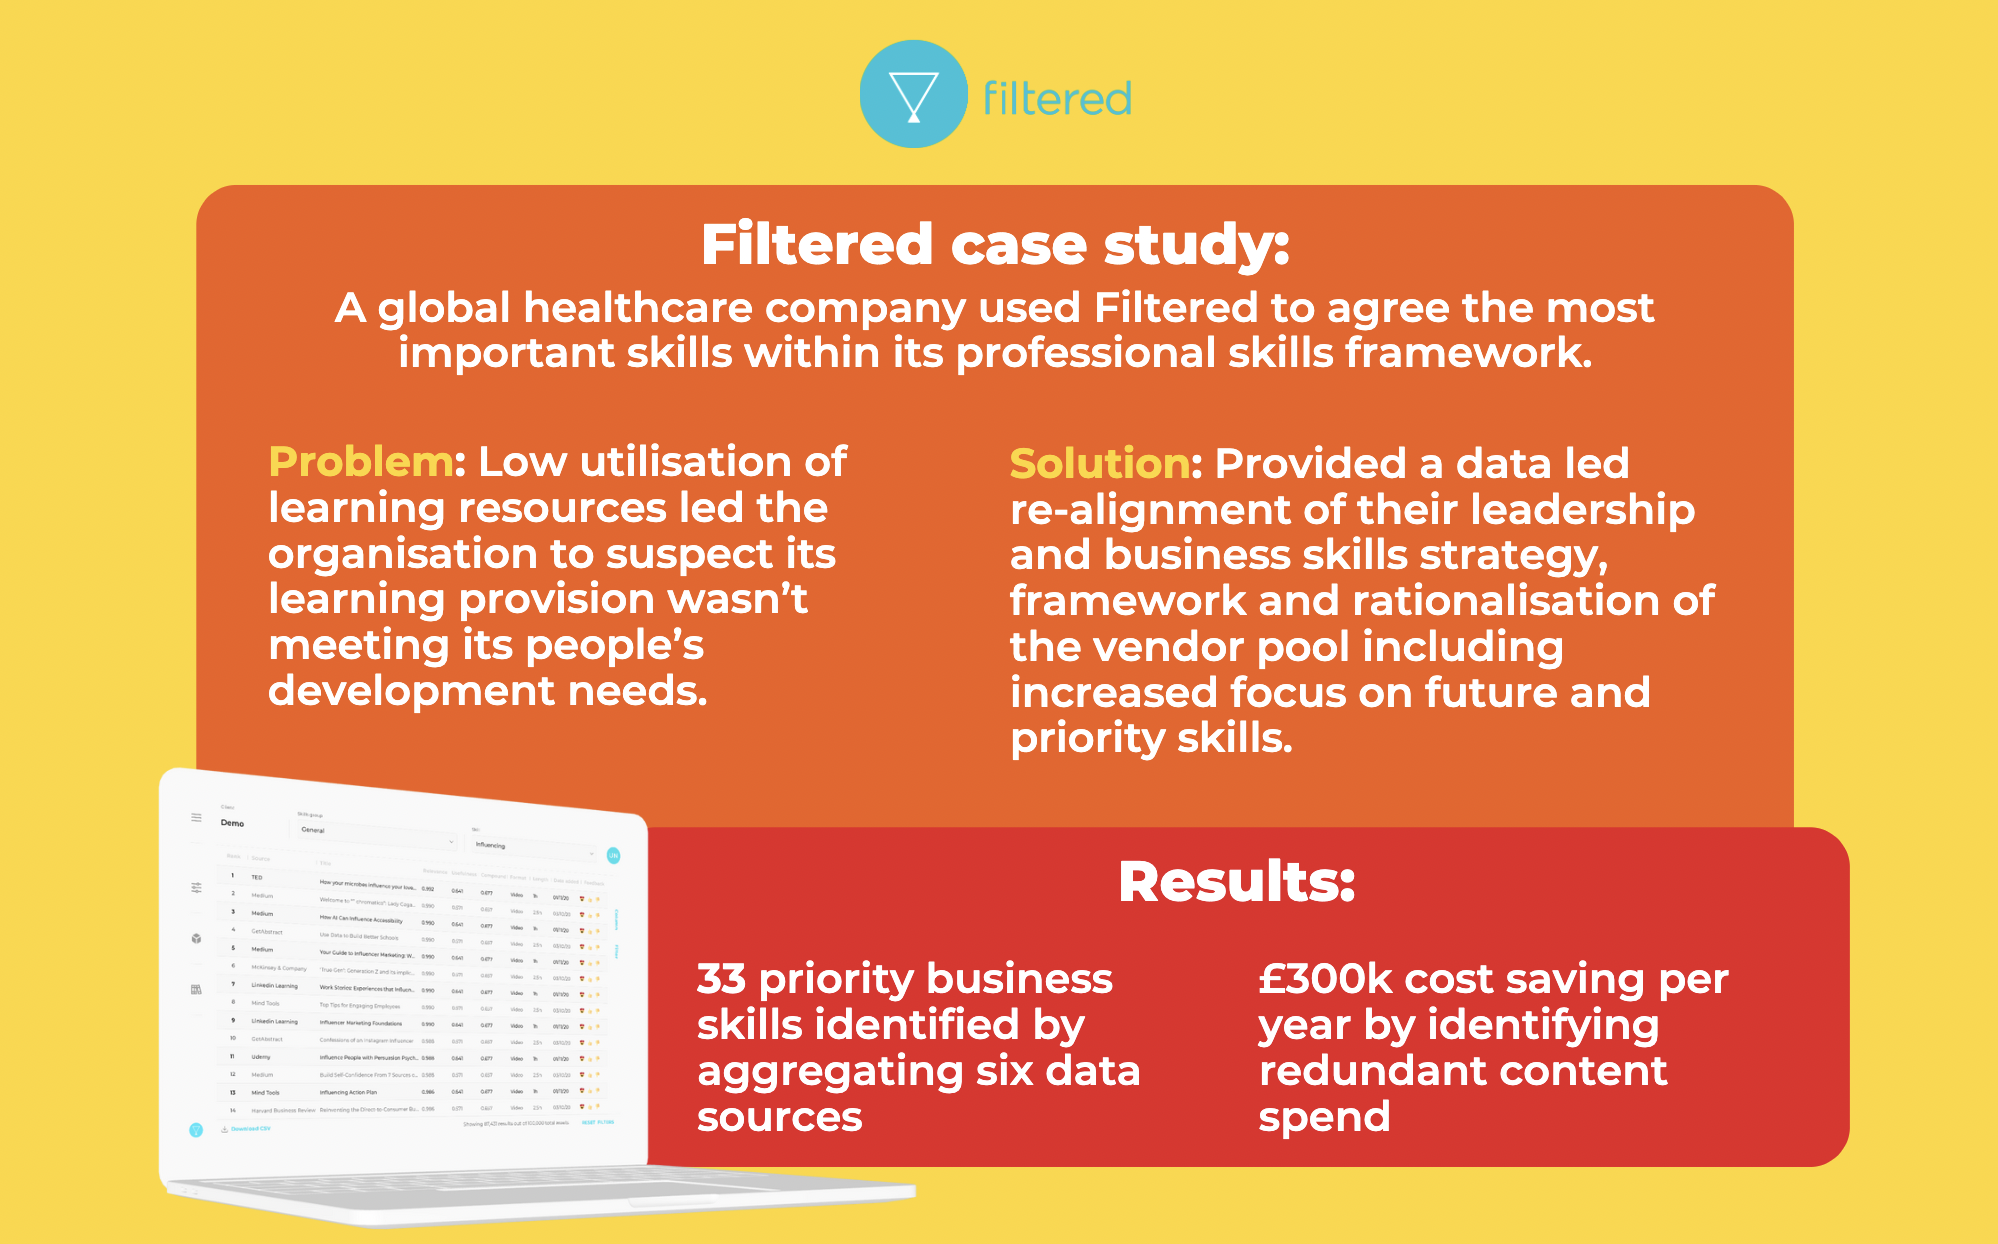 GSK Filtered case study summary